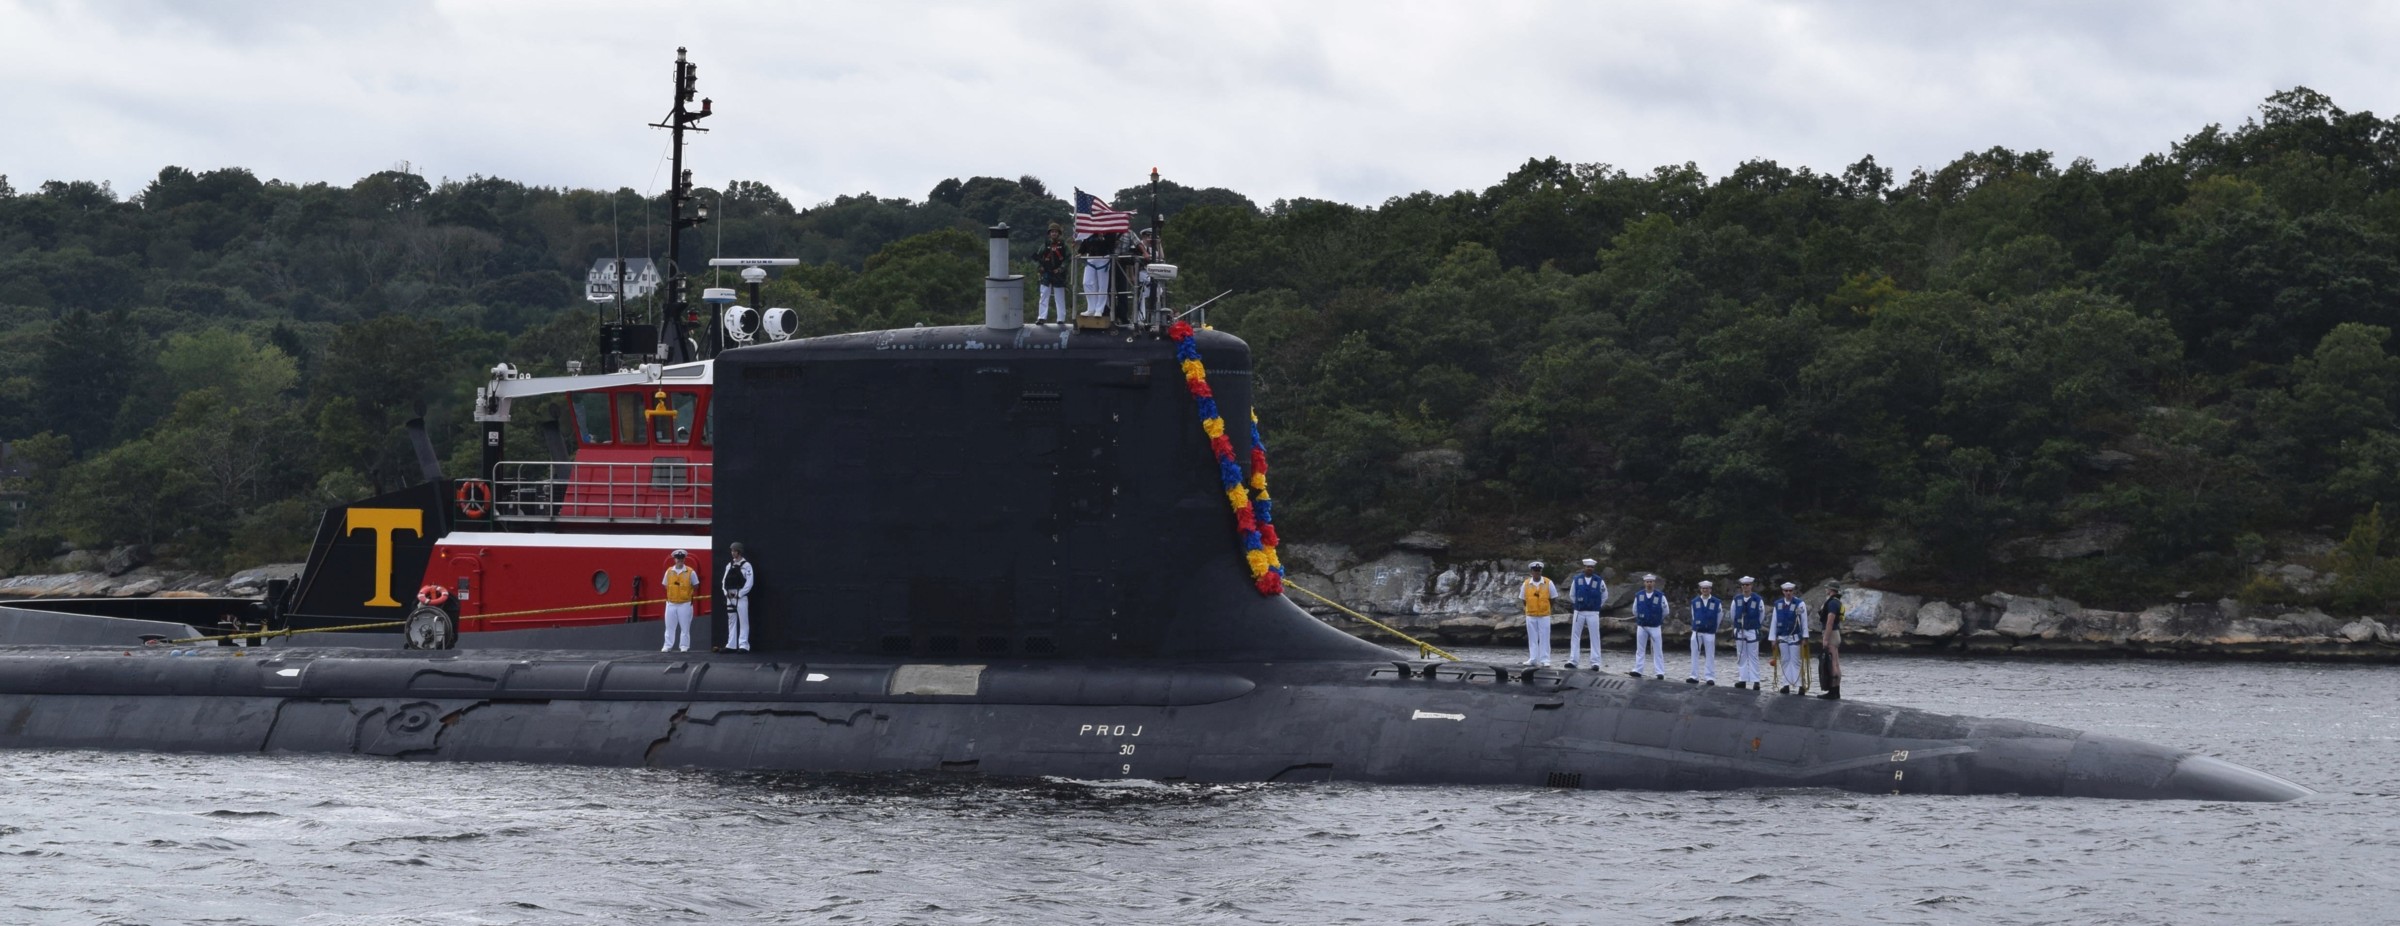 ssn-781 uss california virginia class attack submarine us navy 31